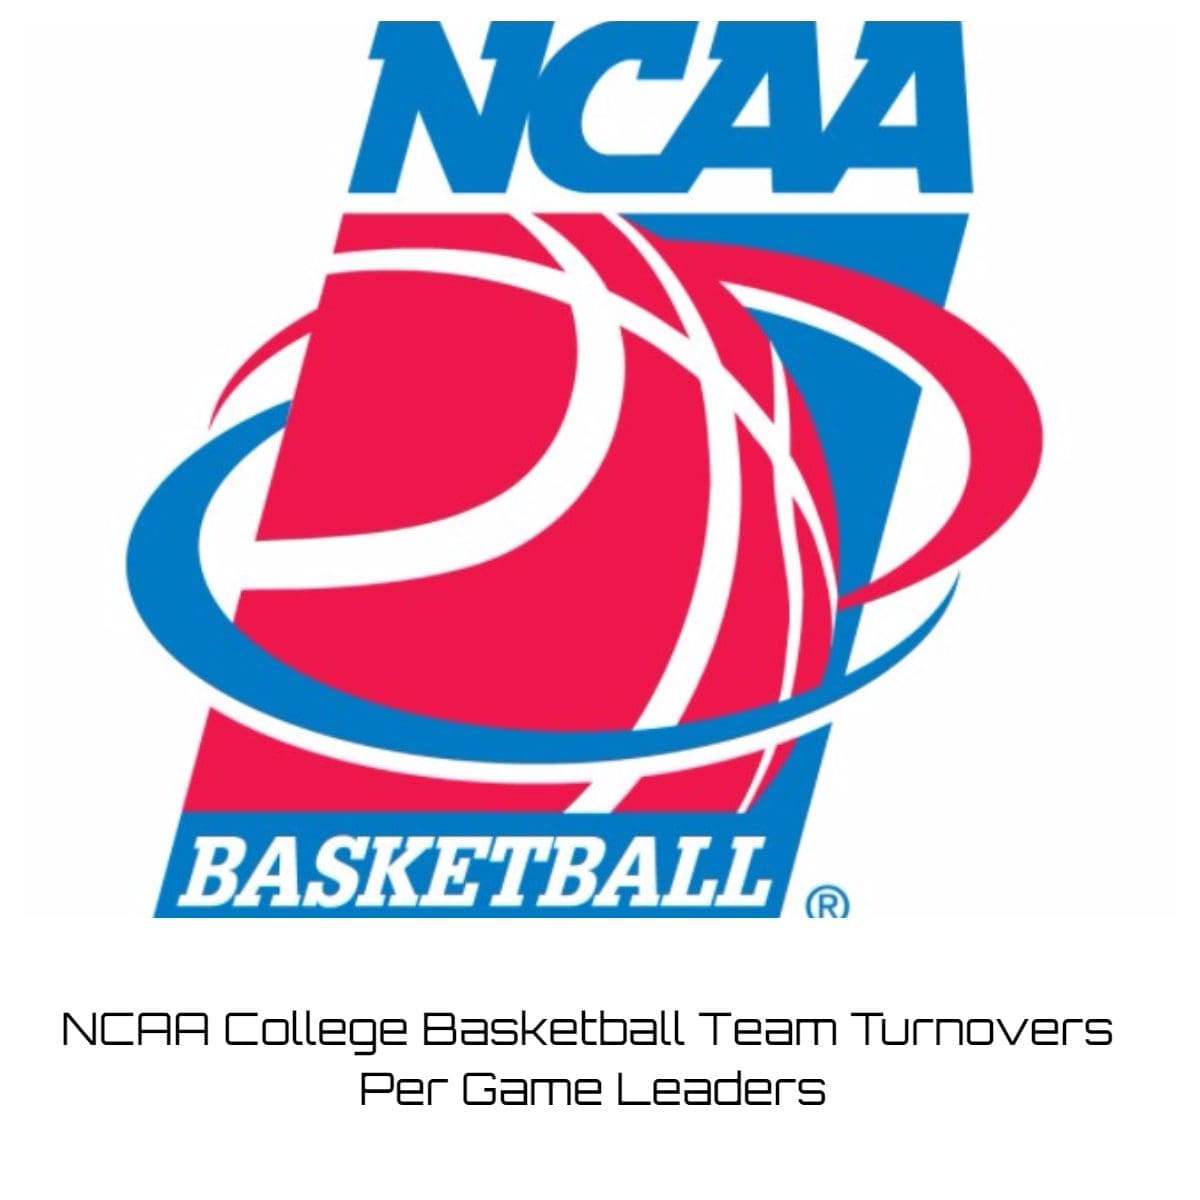 NCAA College Basketball Team Turnovers Per Game Leaders